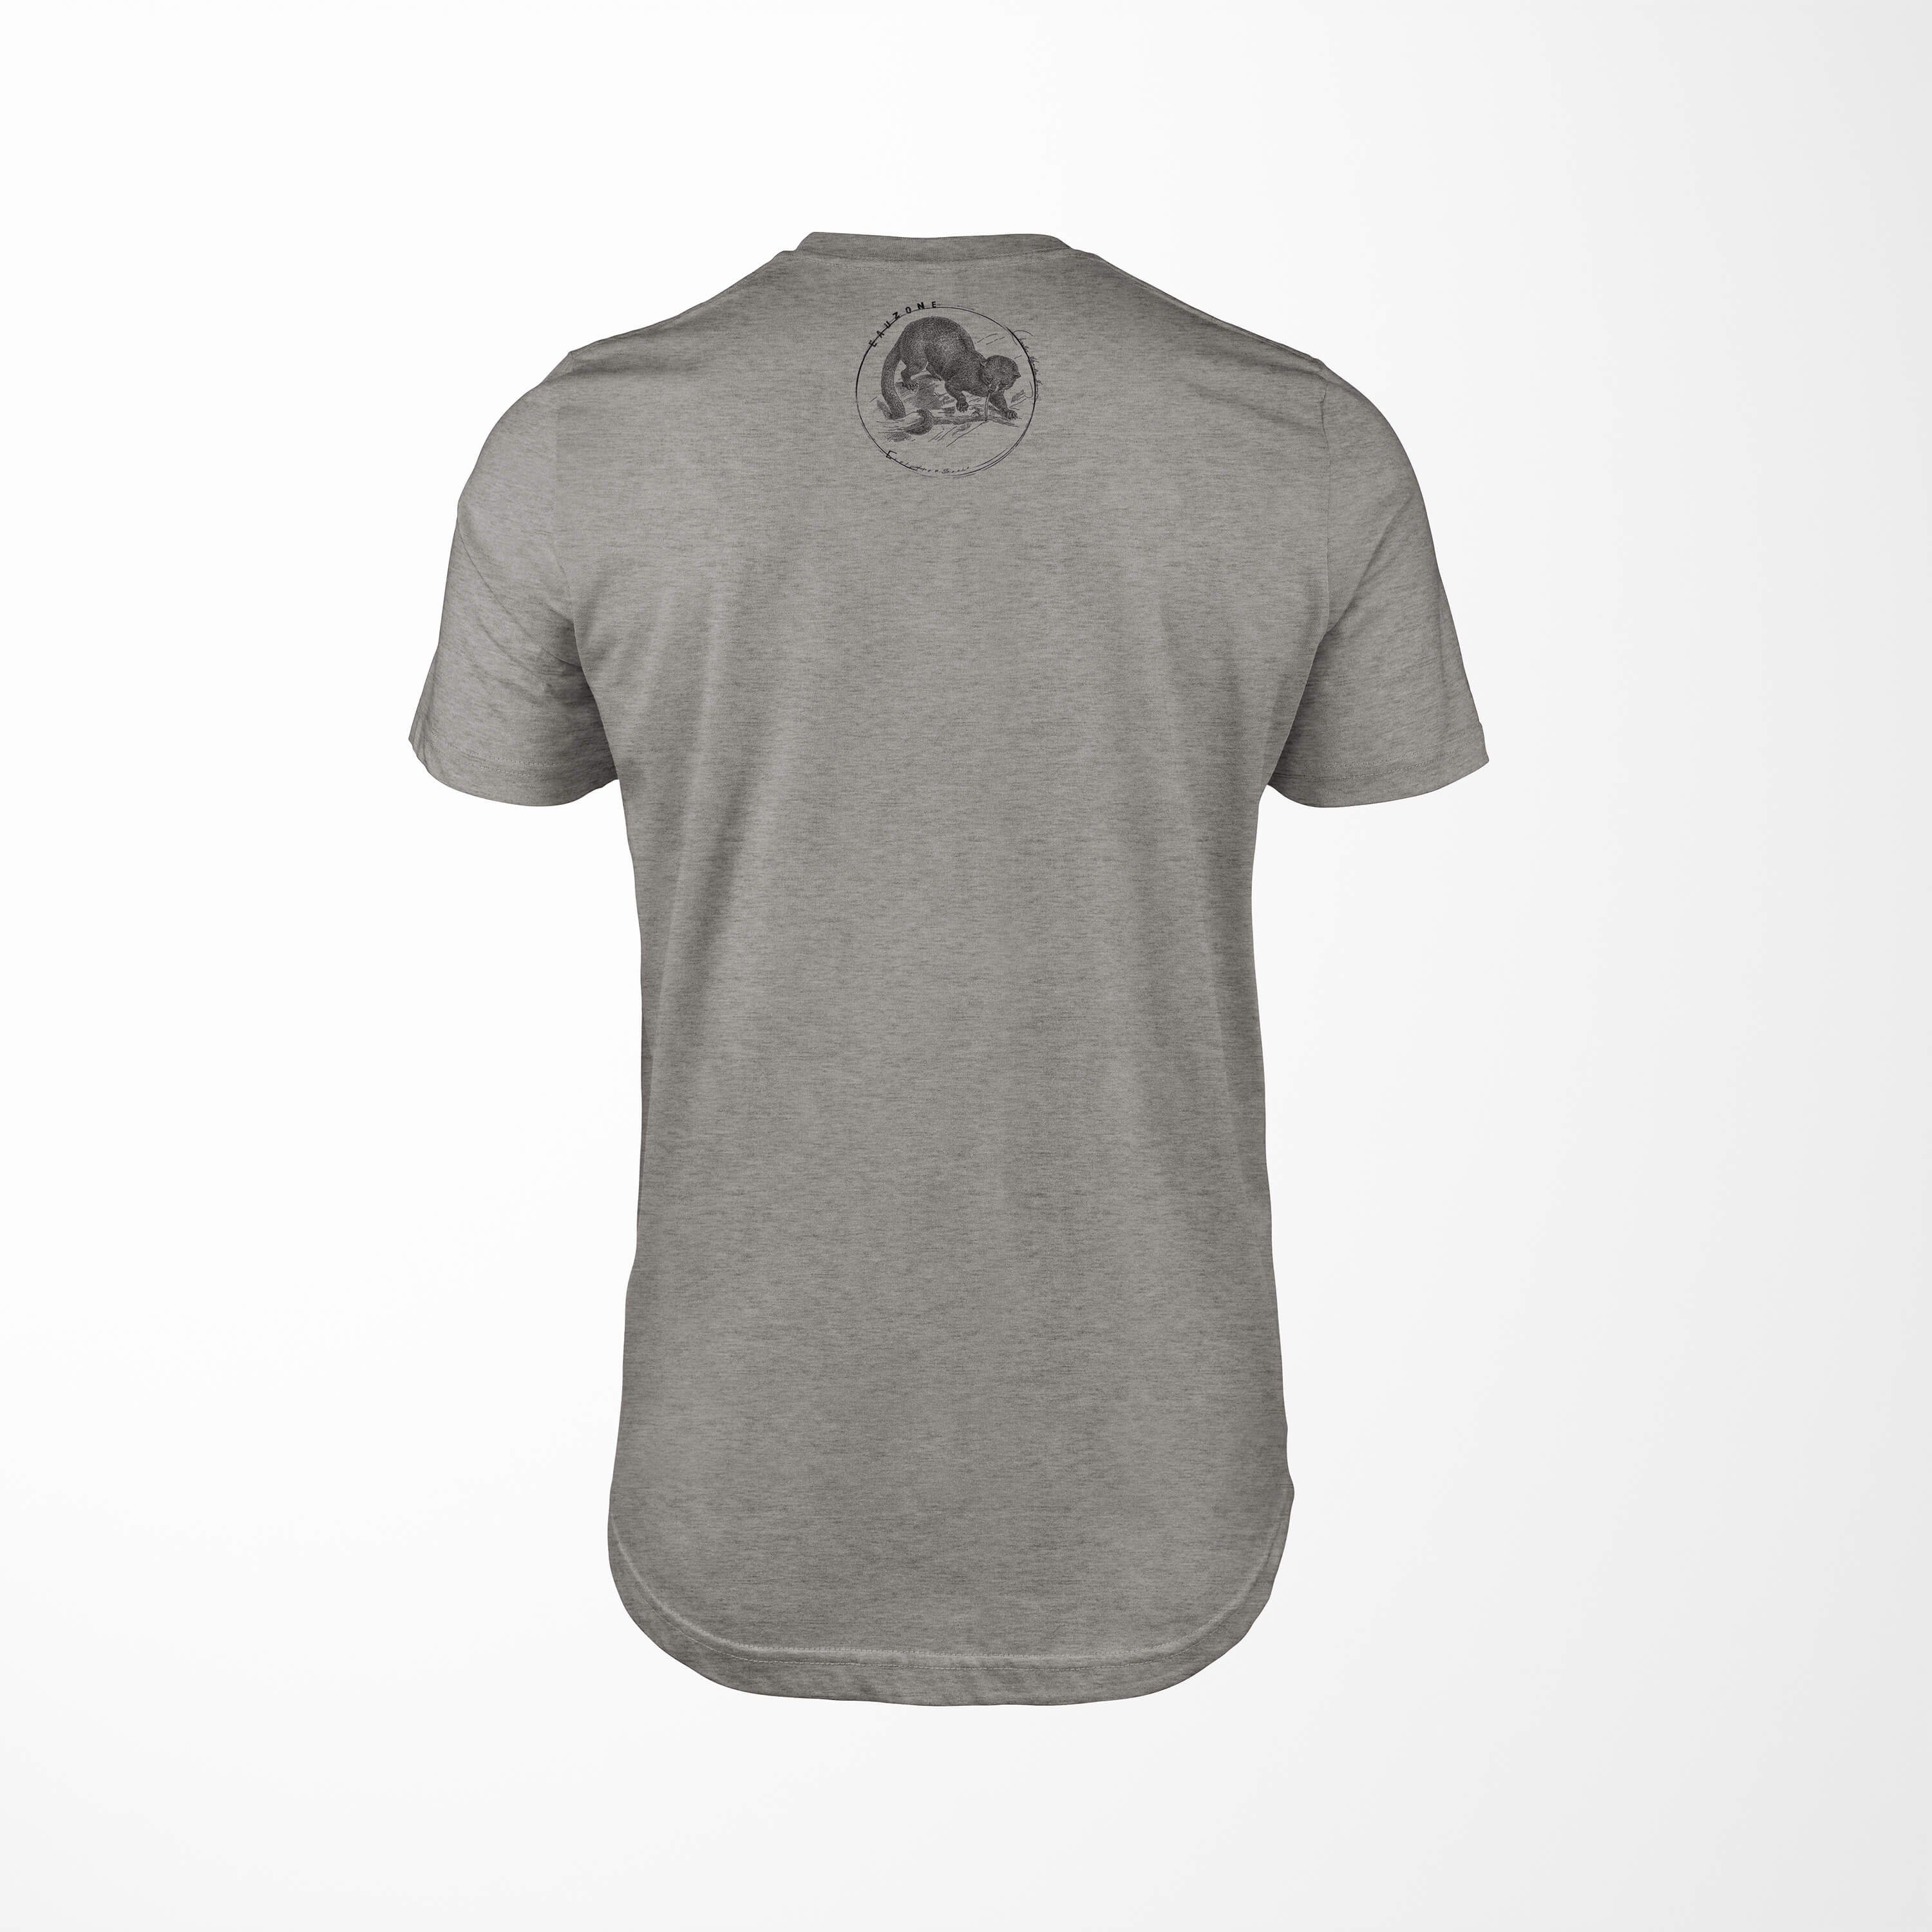 Sinus Ash Evolution Wickelbär T-Shirt Art T-Shirt Herren